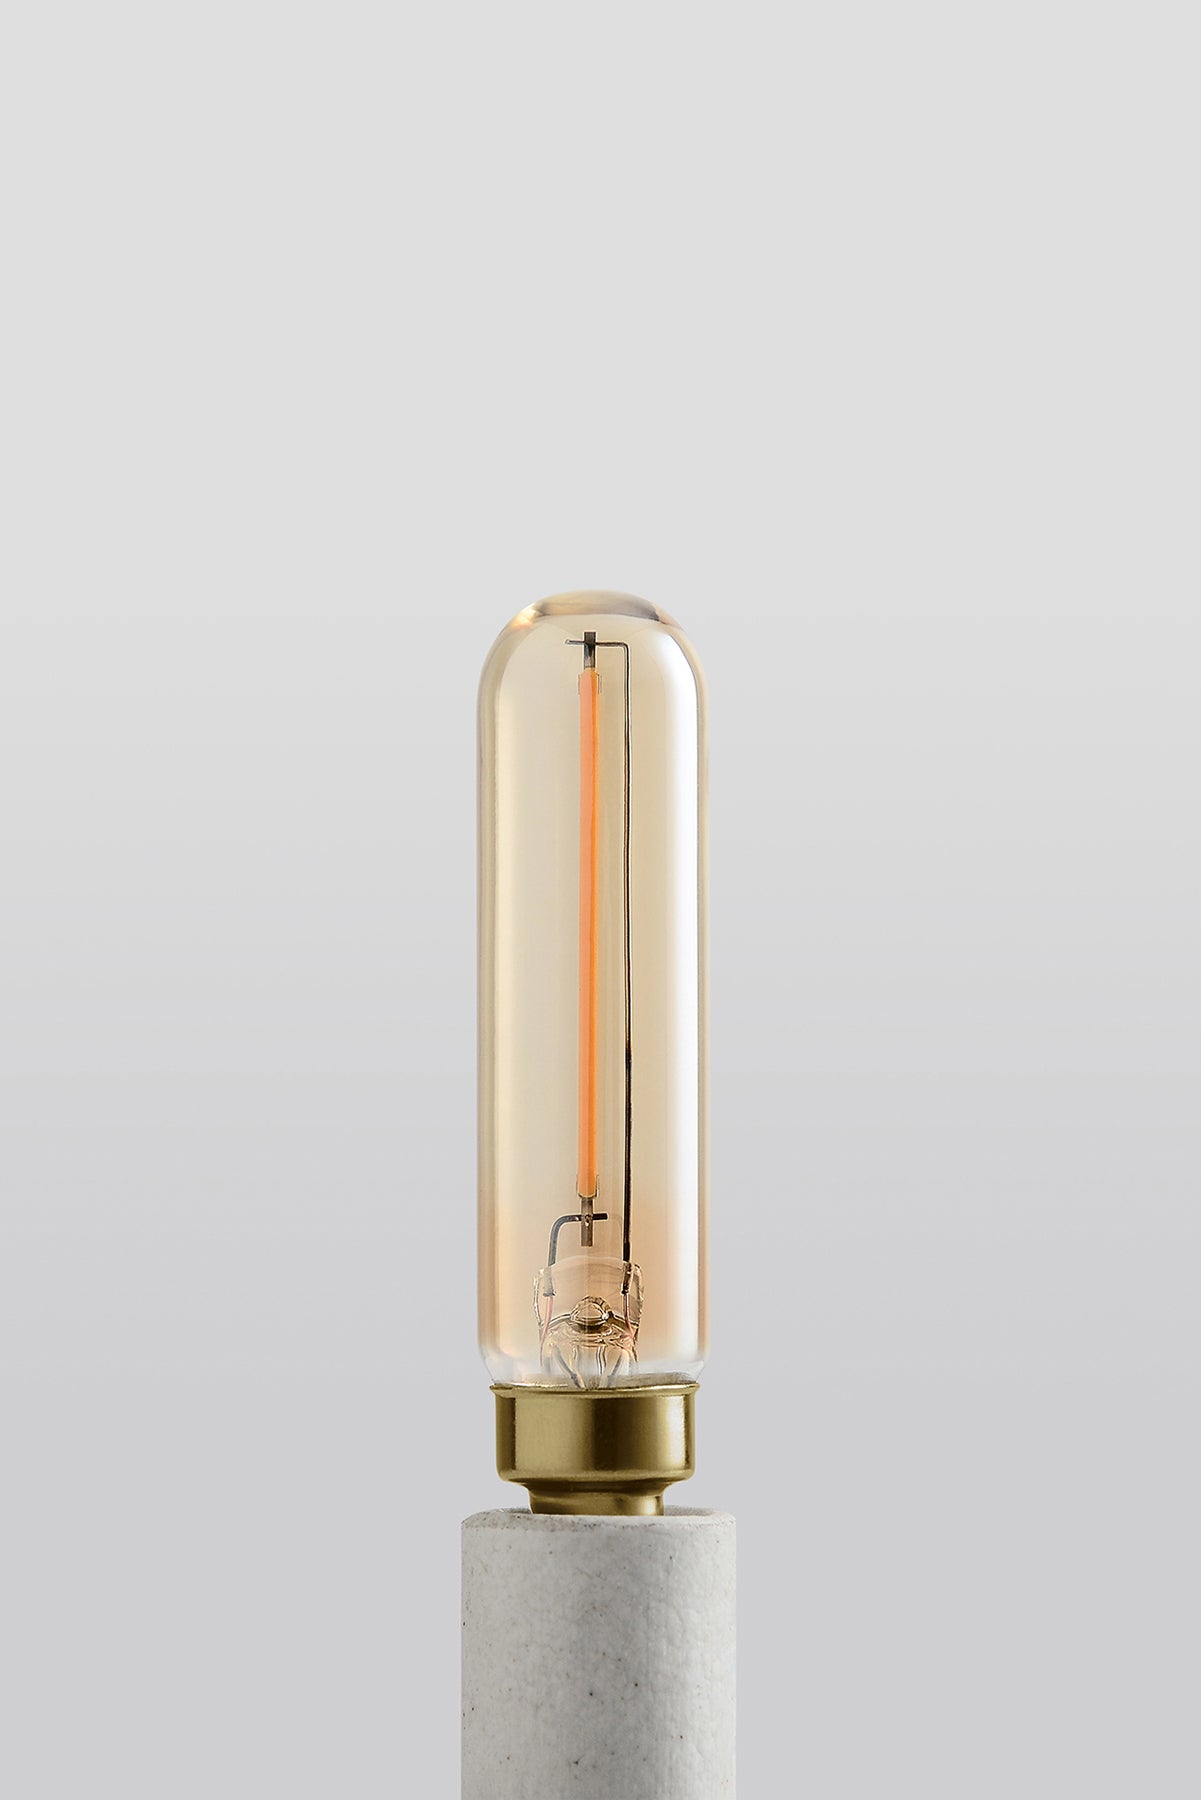 Modern T6 LED light bulb with warm vintage Edison style glow